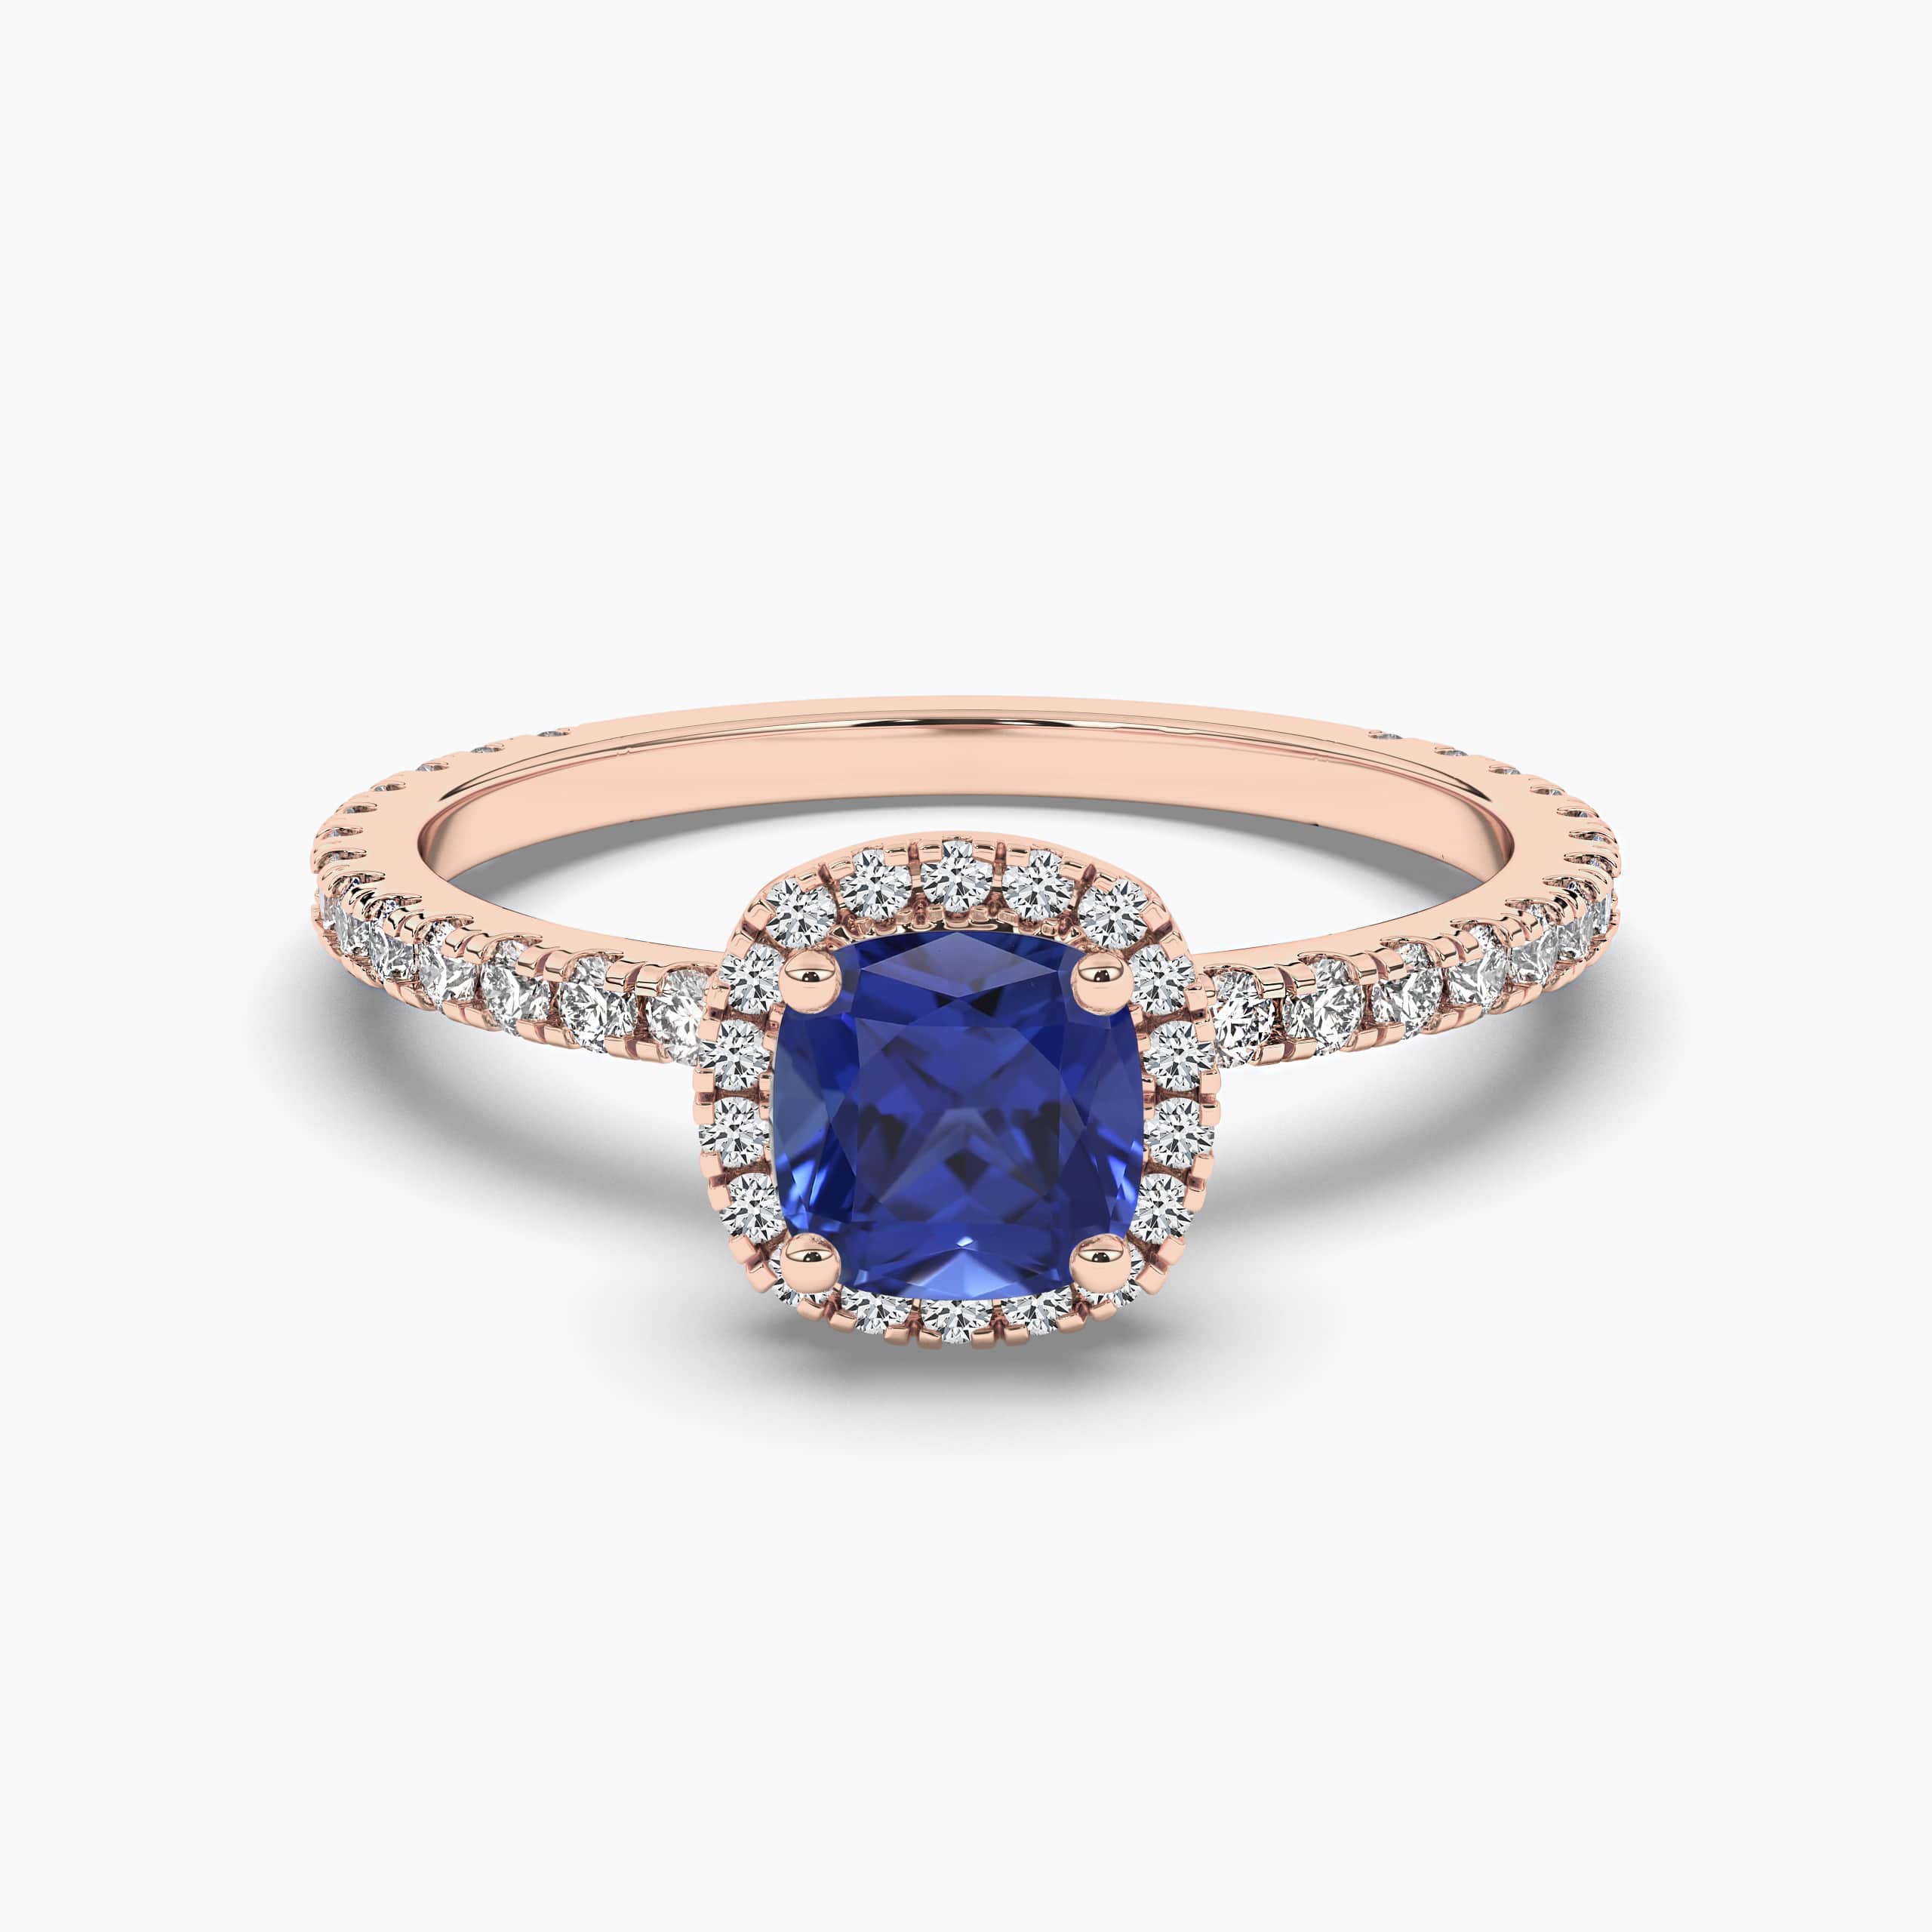 Cushion cut Blue Sapphire engagement ring vintage rose gold